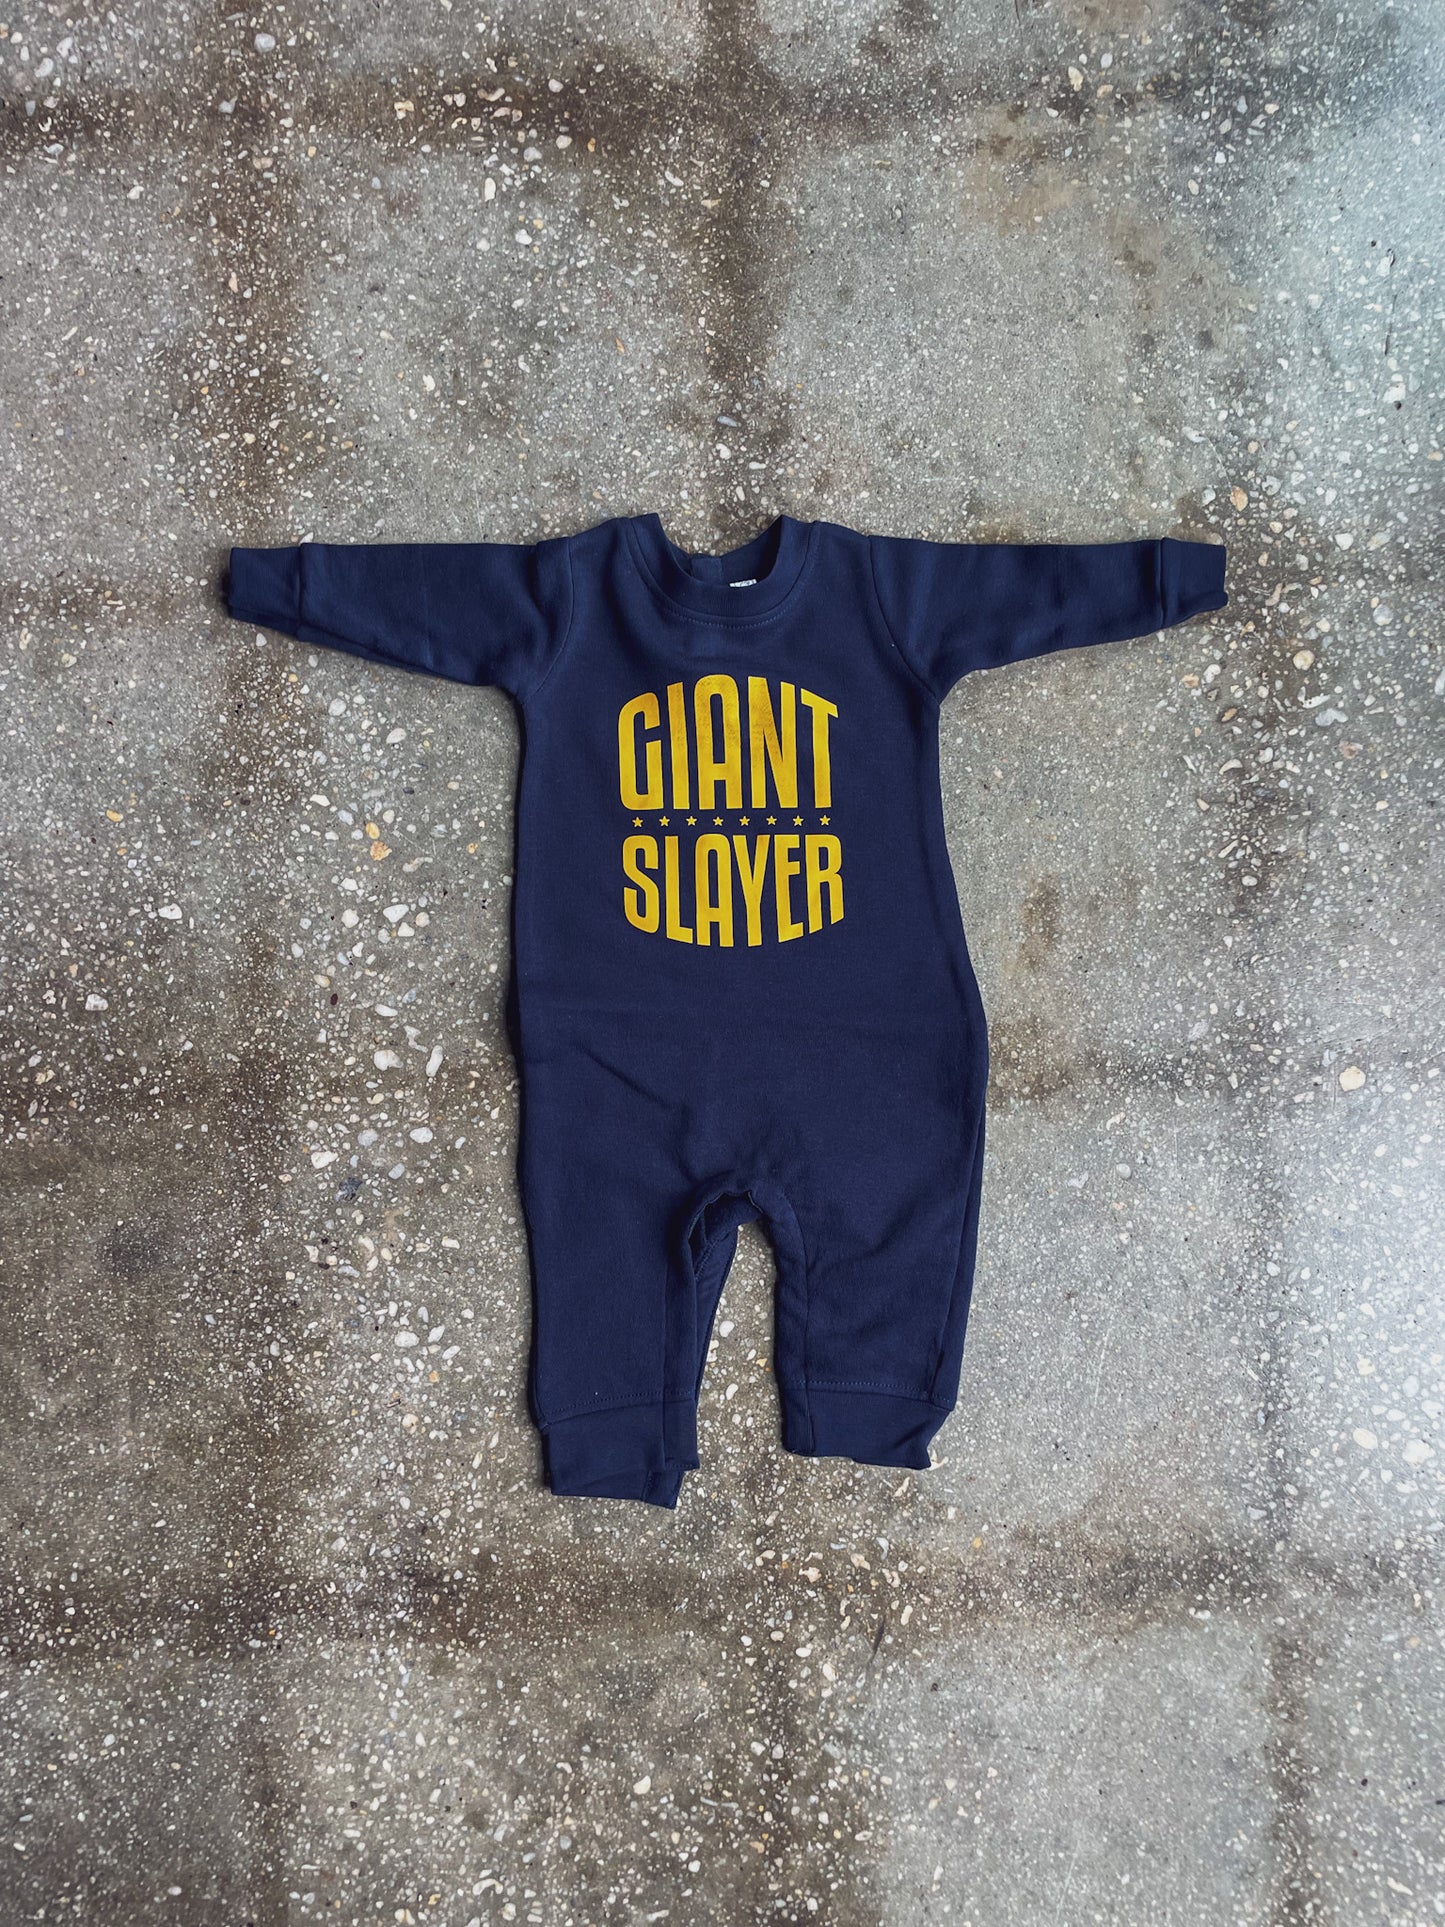 Giant Slayer Infant Fleece Bodysuit